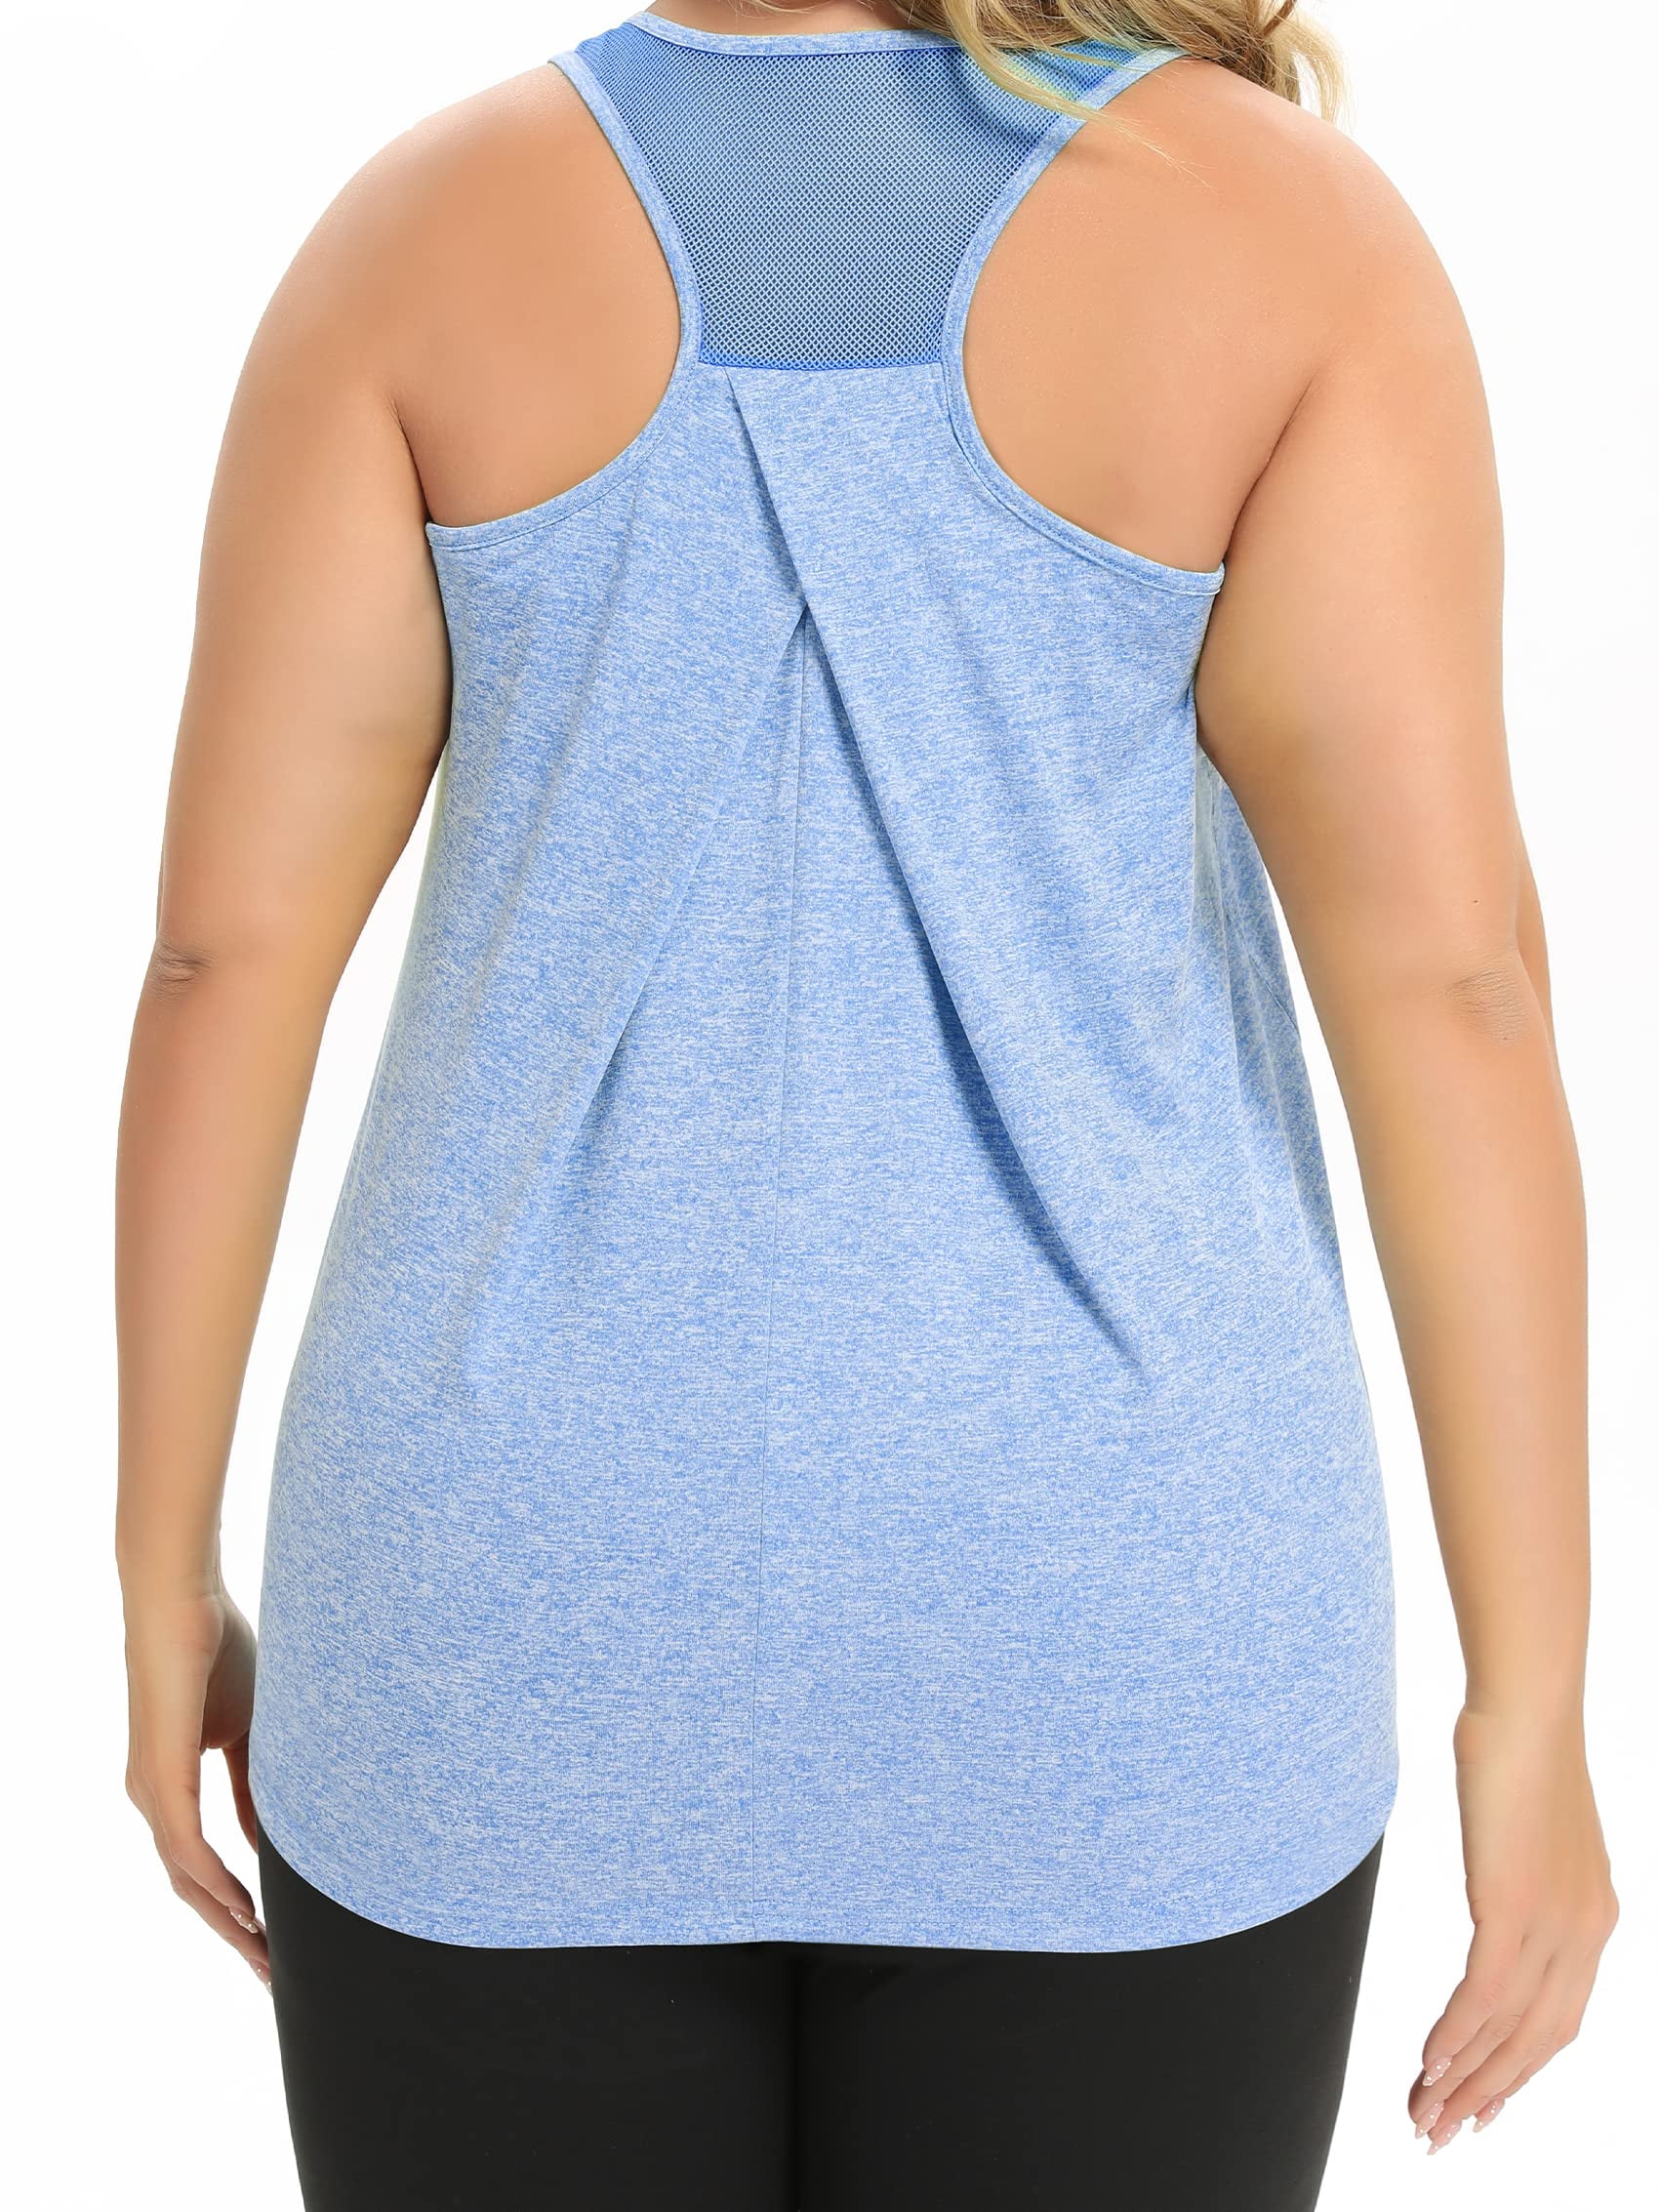 TIYOMI Ladies Plus Size 4X Tank Tops Blue Athletic Shirts Yoga